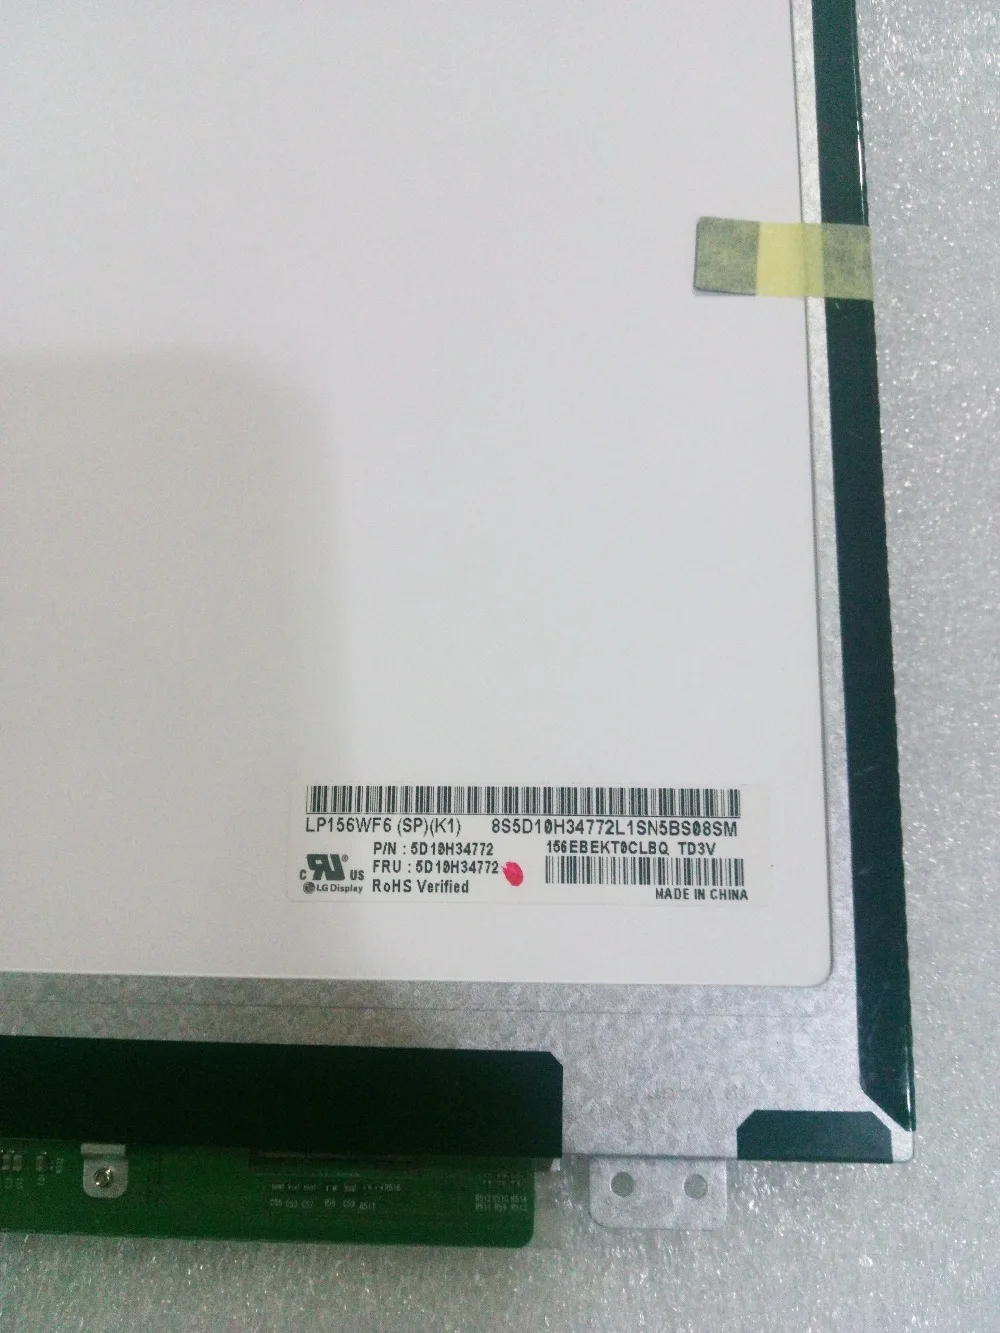 

IPS Matrix for Laptop 15.6" LP156WF6-SPK1 LP156WF6 SPL1 FHD 1920X1080 Matte 30Pin LP156WF6 SPK1 LED Display Replacement